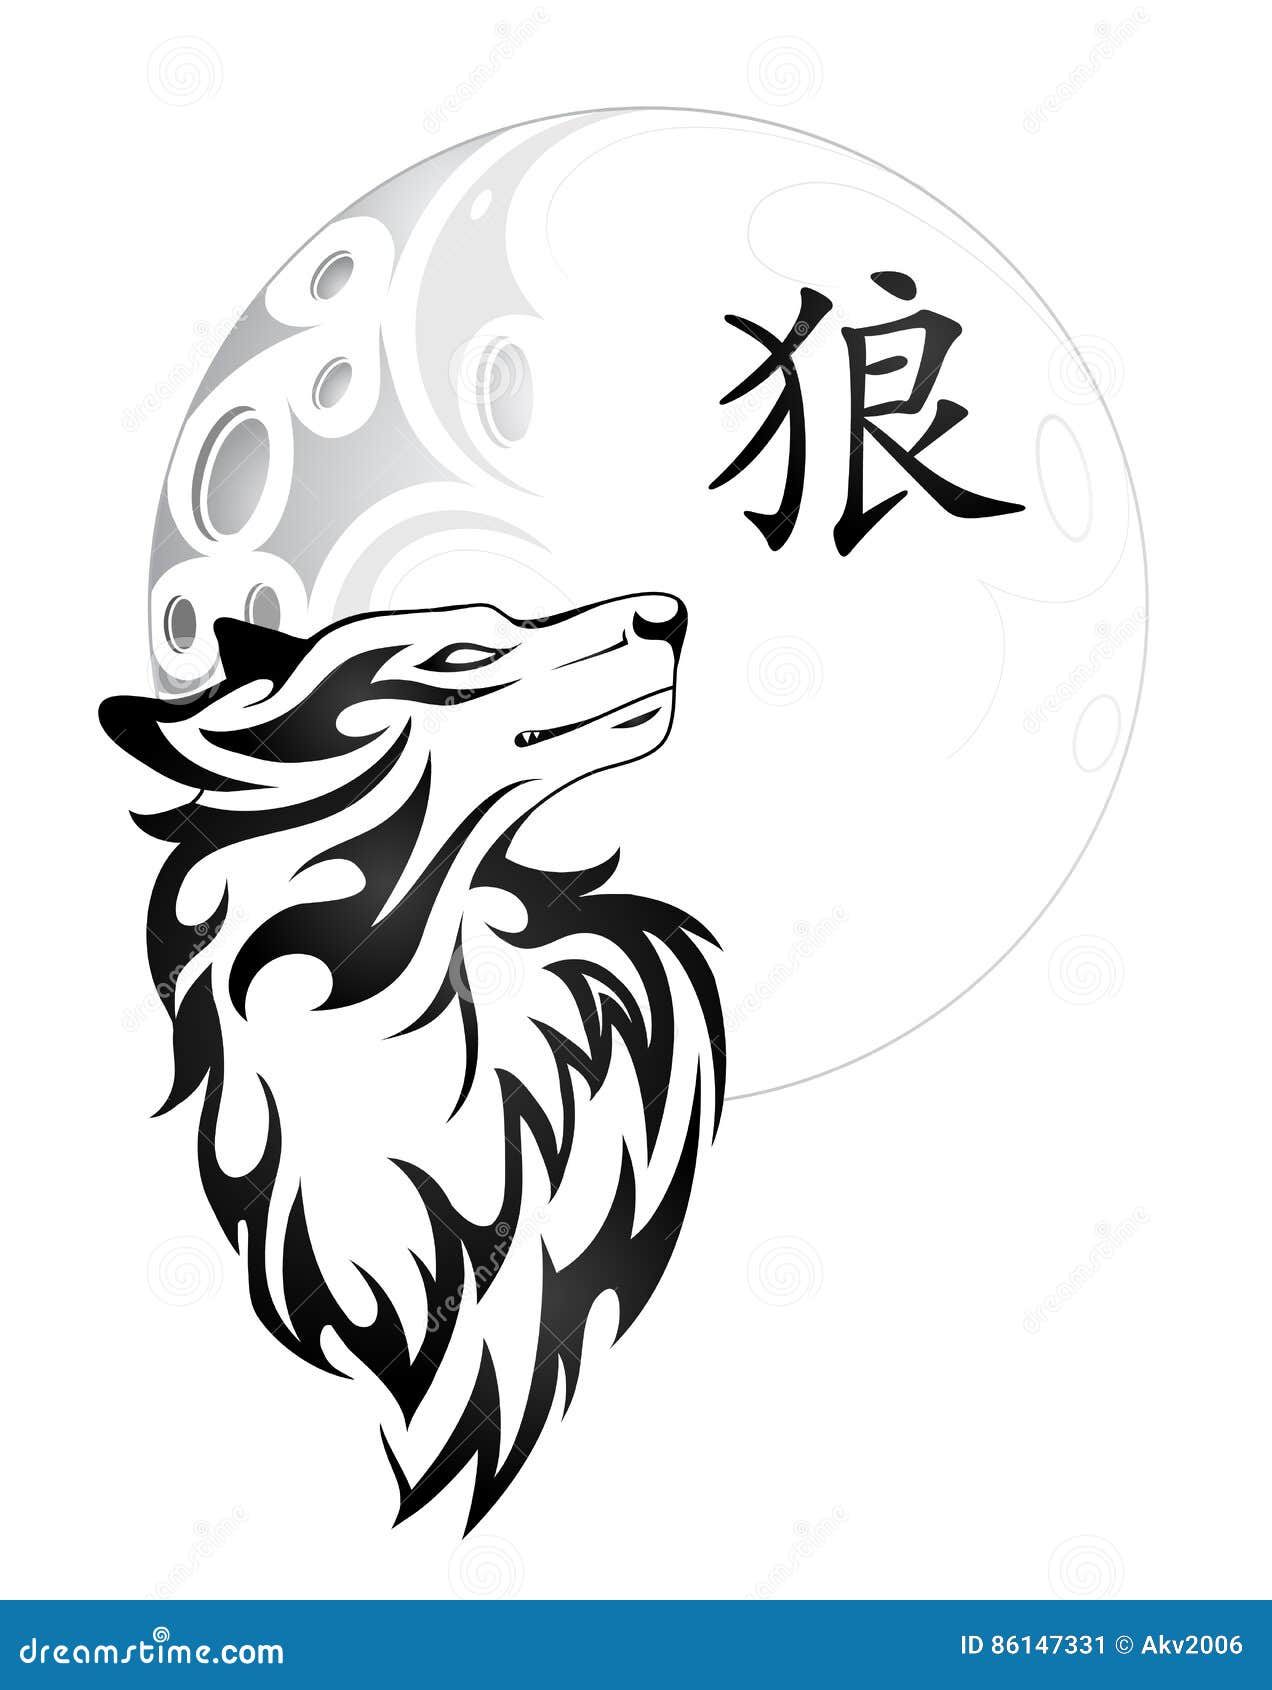 Oneeyed Coyote Tattoo by Koomiesan  Fur Affinity dot net